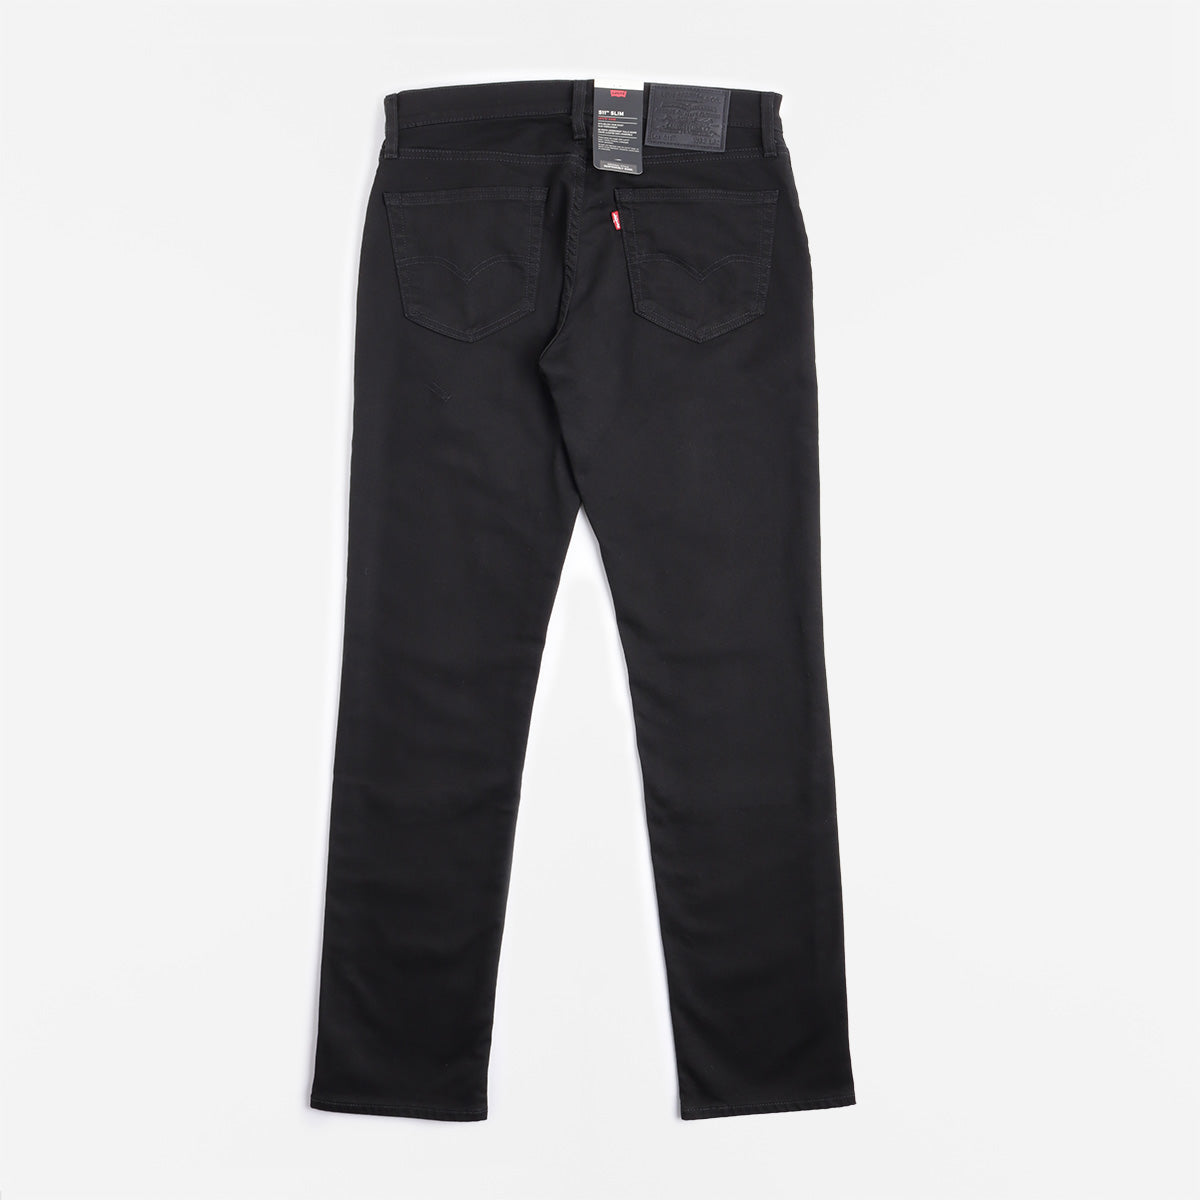 Levis 511 Slim Fit Jeans, Nightshine, Men's – Urban Industry